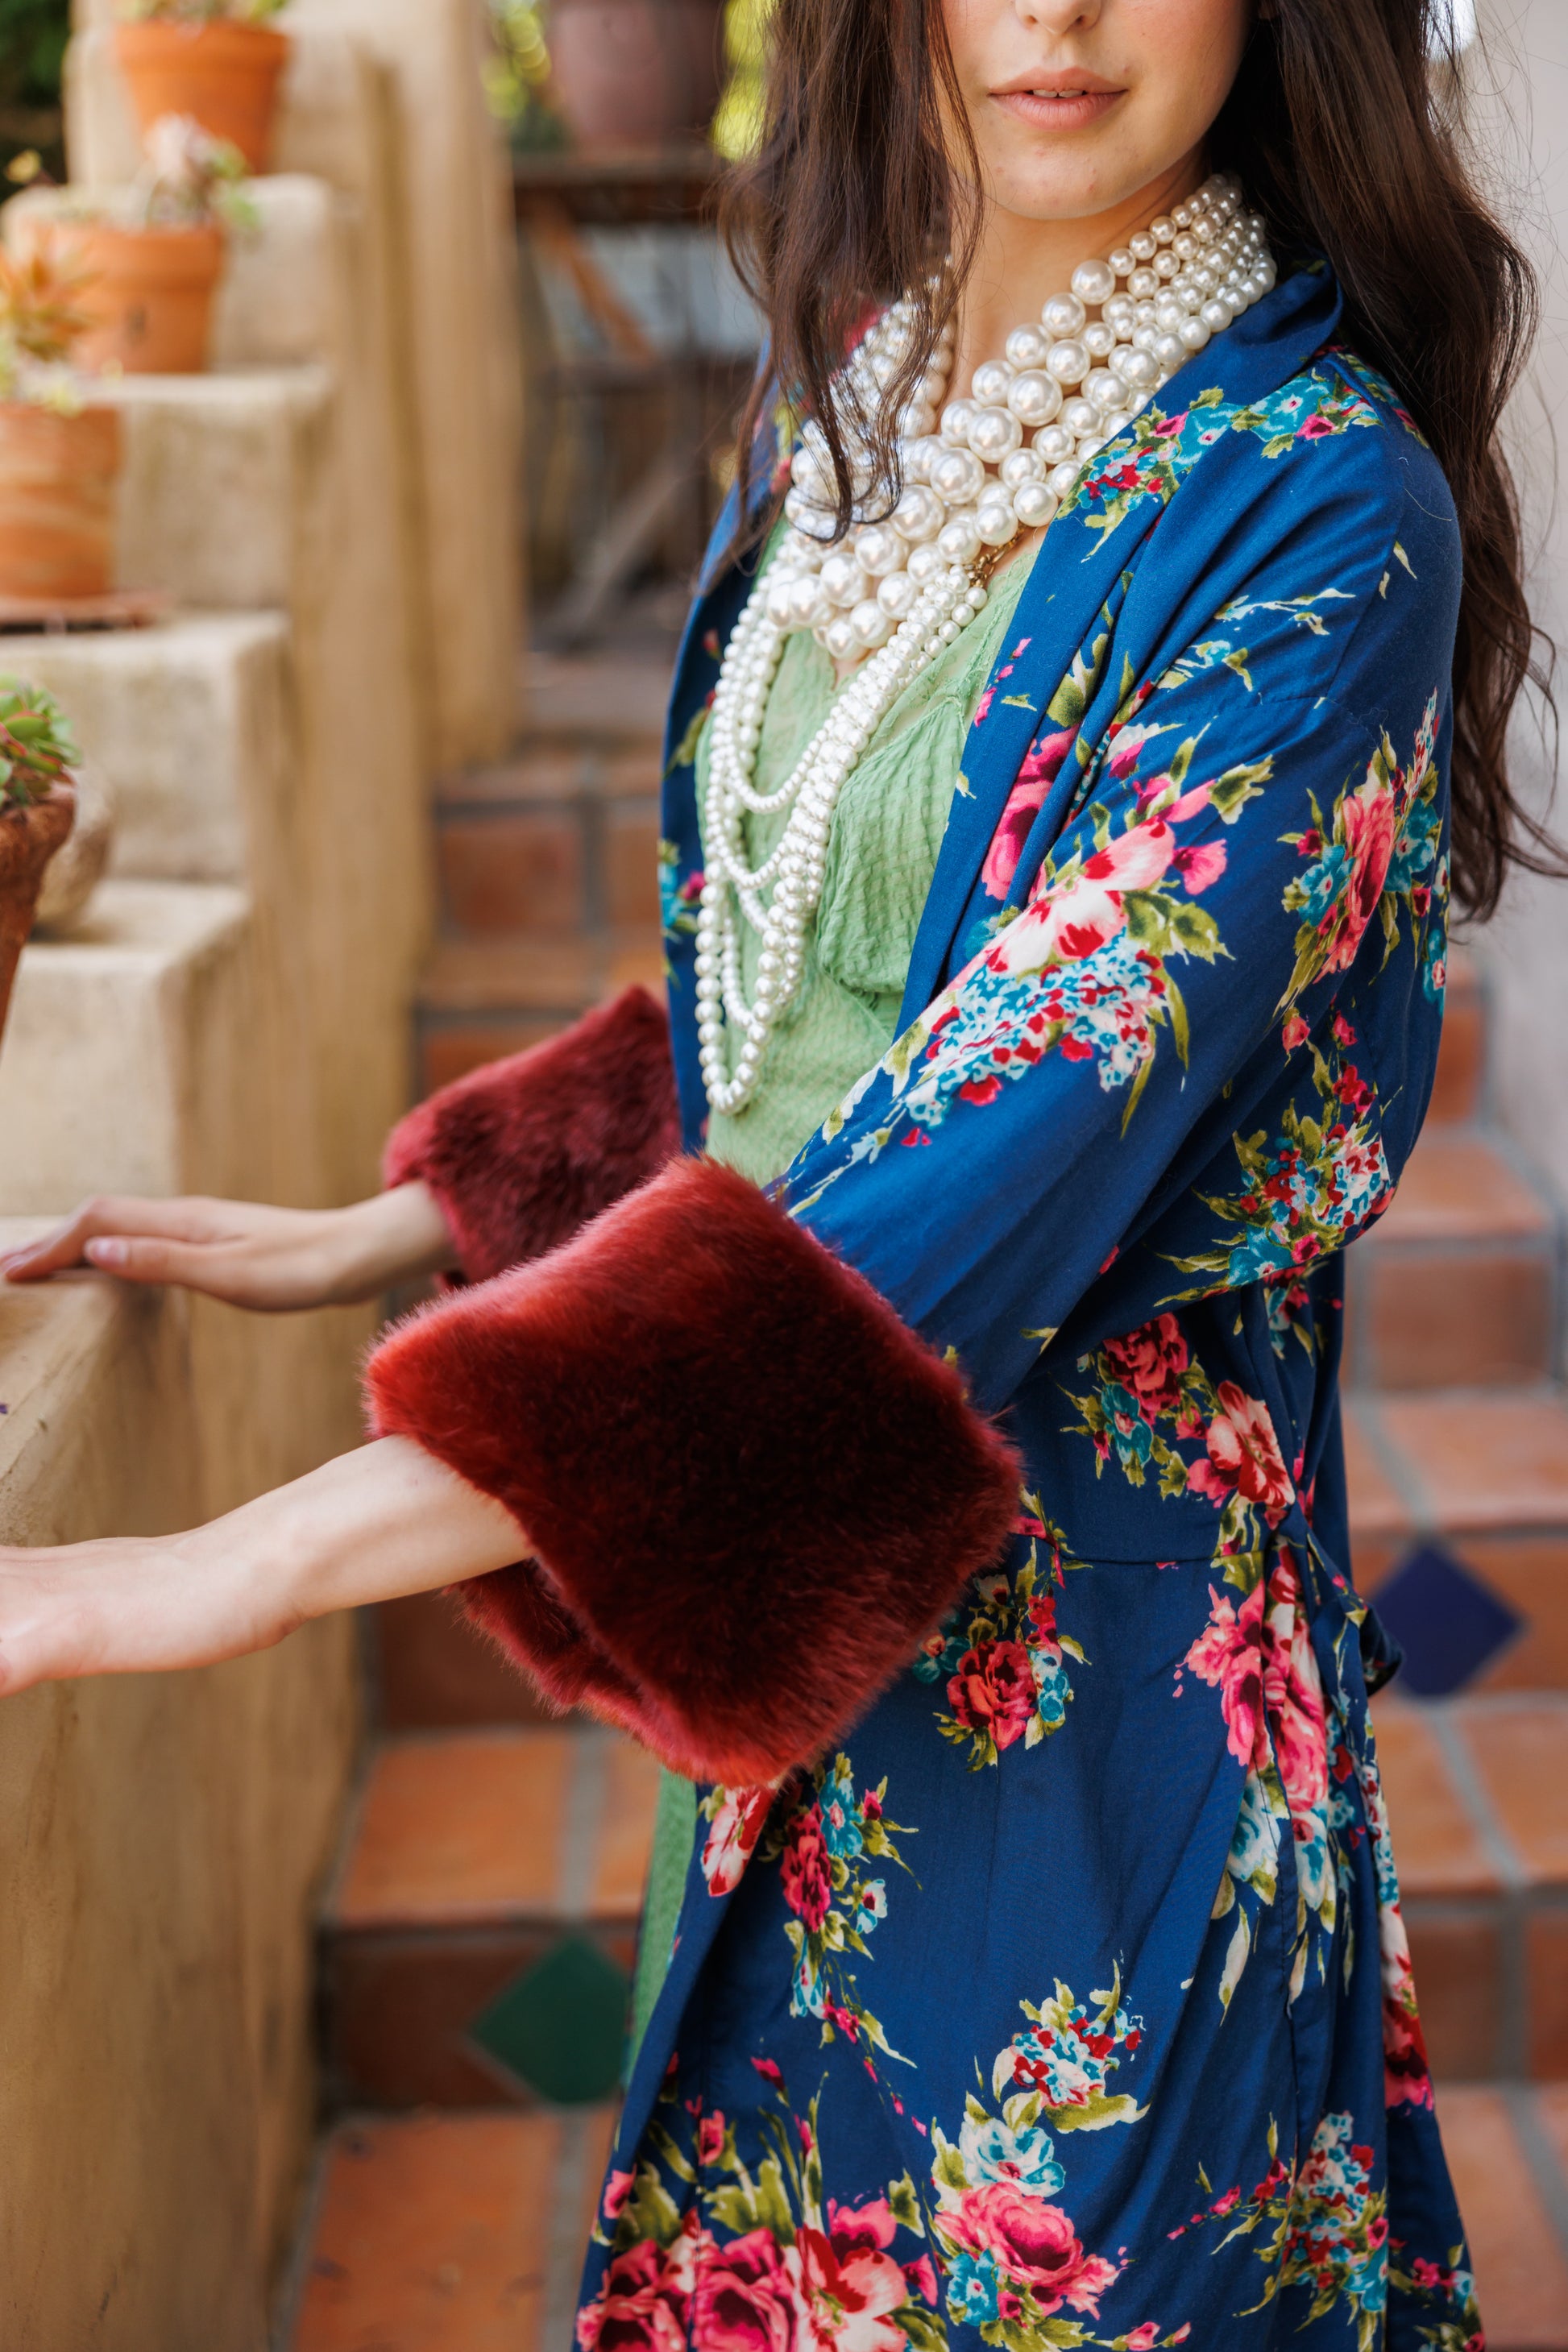 jennafer grace Norma Faux Fur Koi Kimono blue floral with dark red burgundy wine faux fur cuffs light jacket robe boho bohemian hippie romantic whimsical unisex handmade in California USA